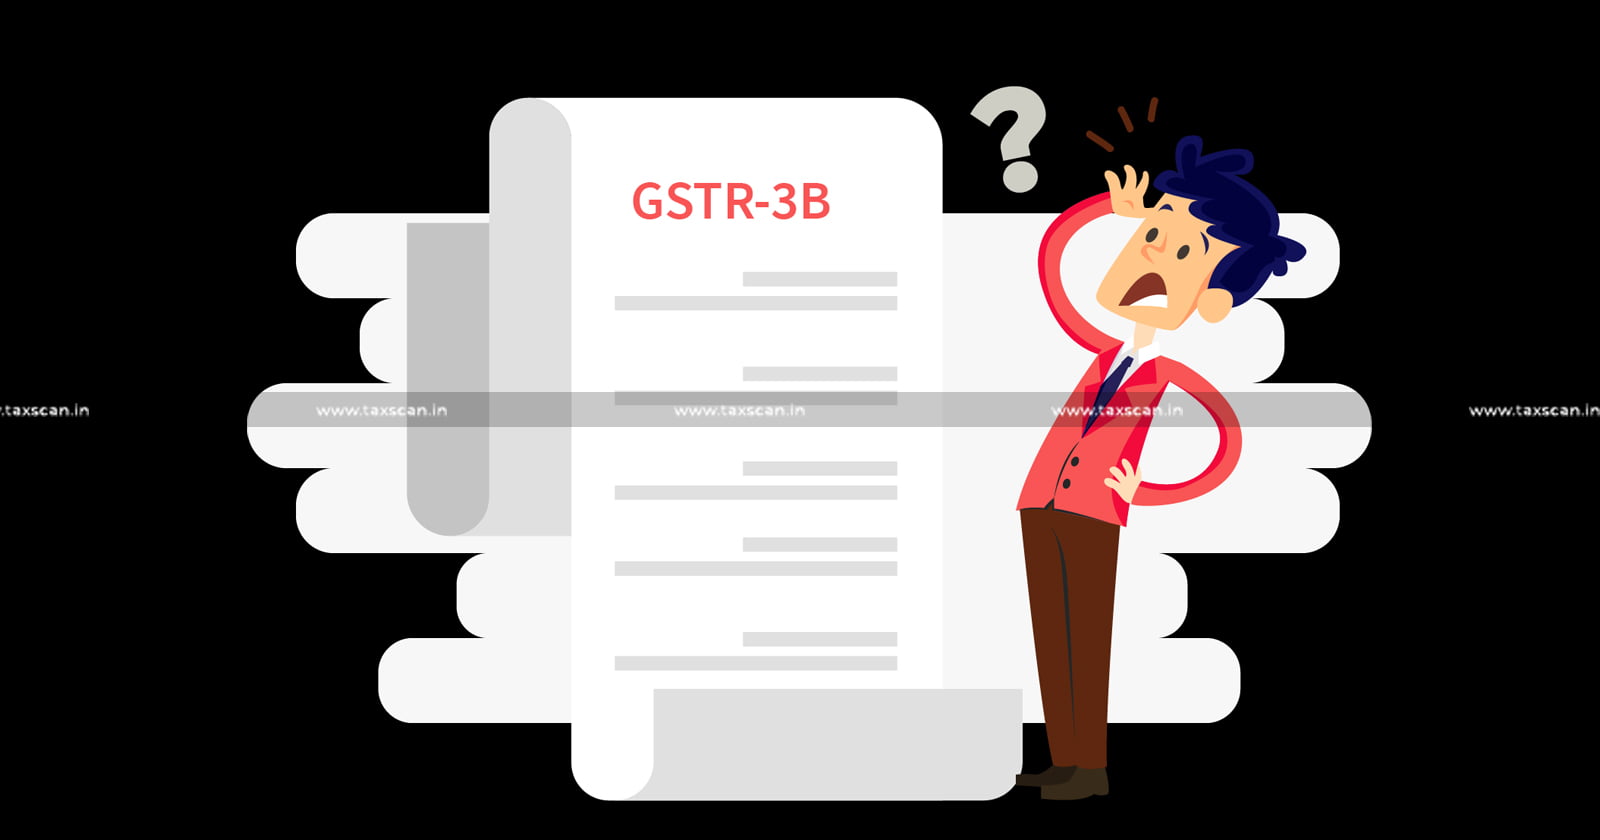 Wipro to Revise GSTR-3B - Wipro - Karnataka High Court - GSTR-3B - CBIC Circular - CBIC - GSTR - Bonafide Mistakes - GST - Bonafide Mistakes in GSTR-3B - taxscan